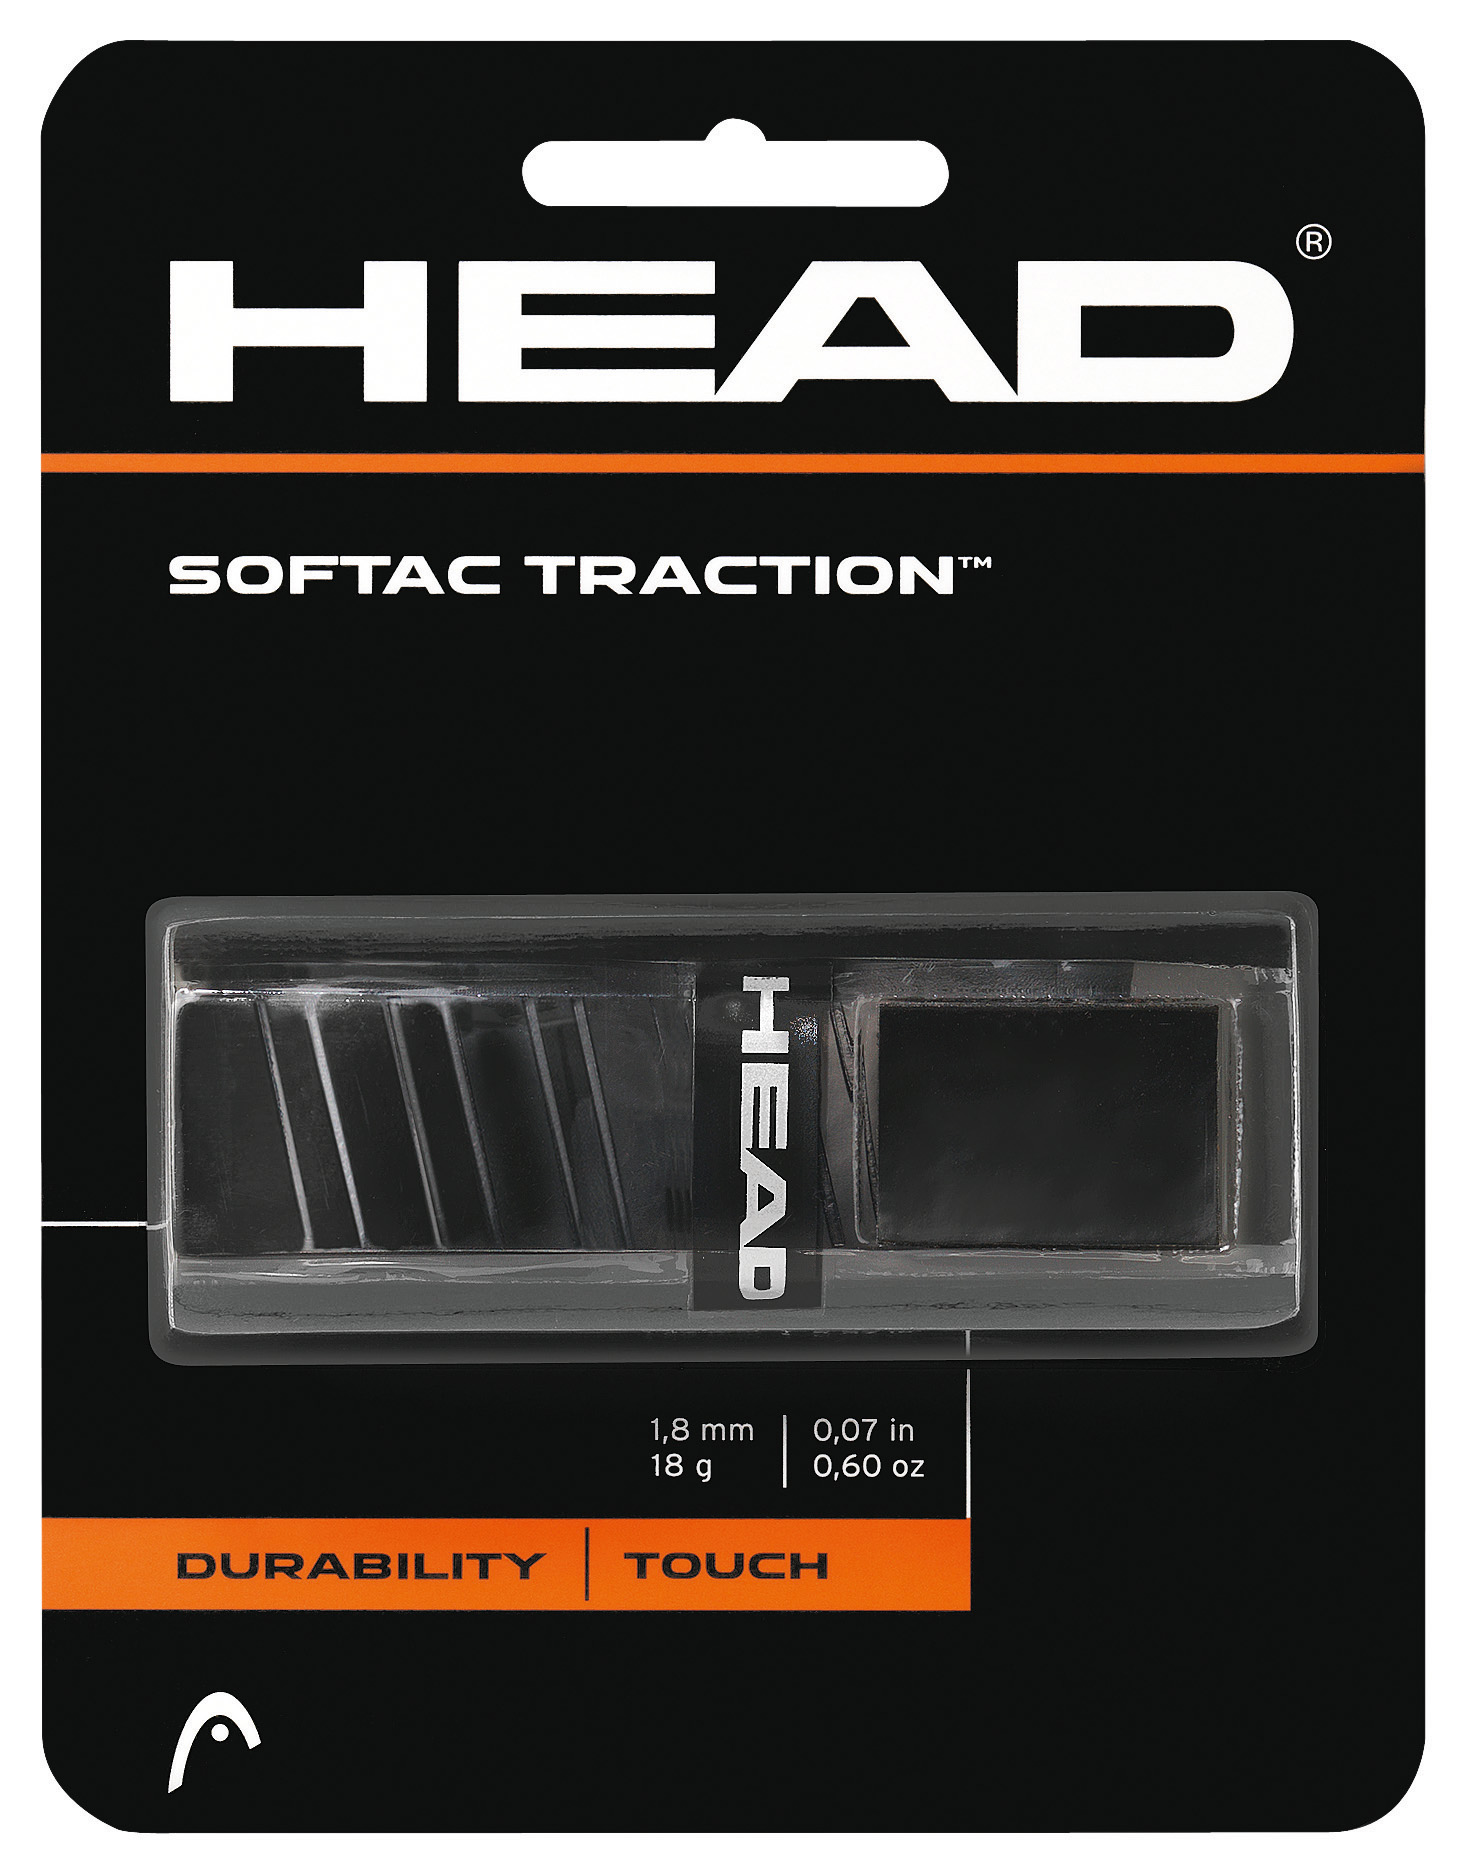 Softac Traction schwarz   Basisband